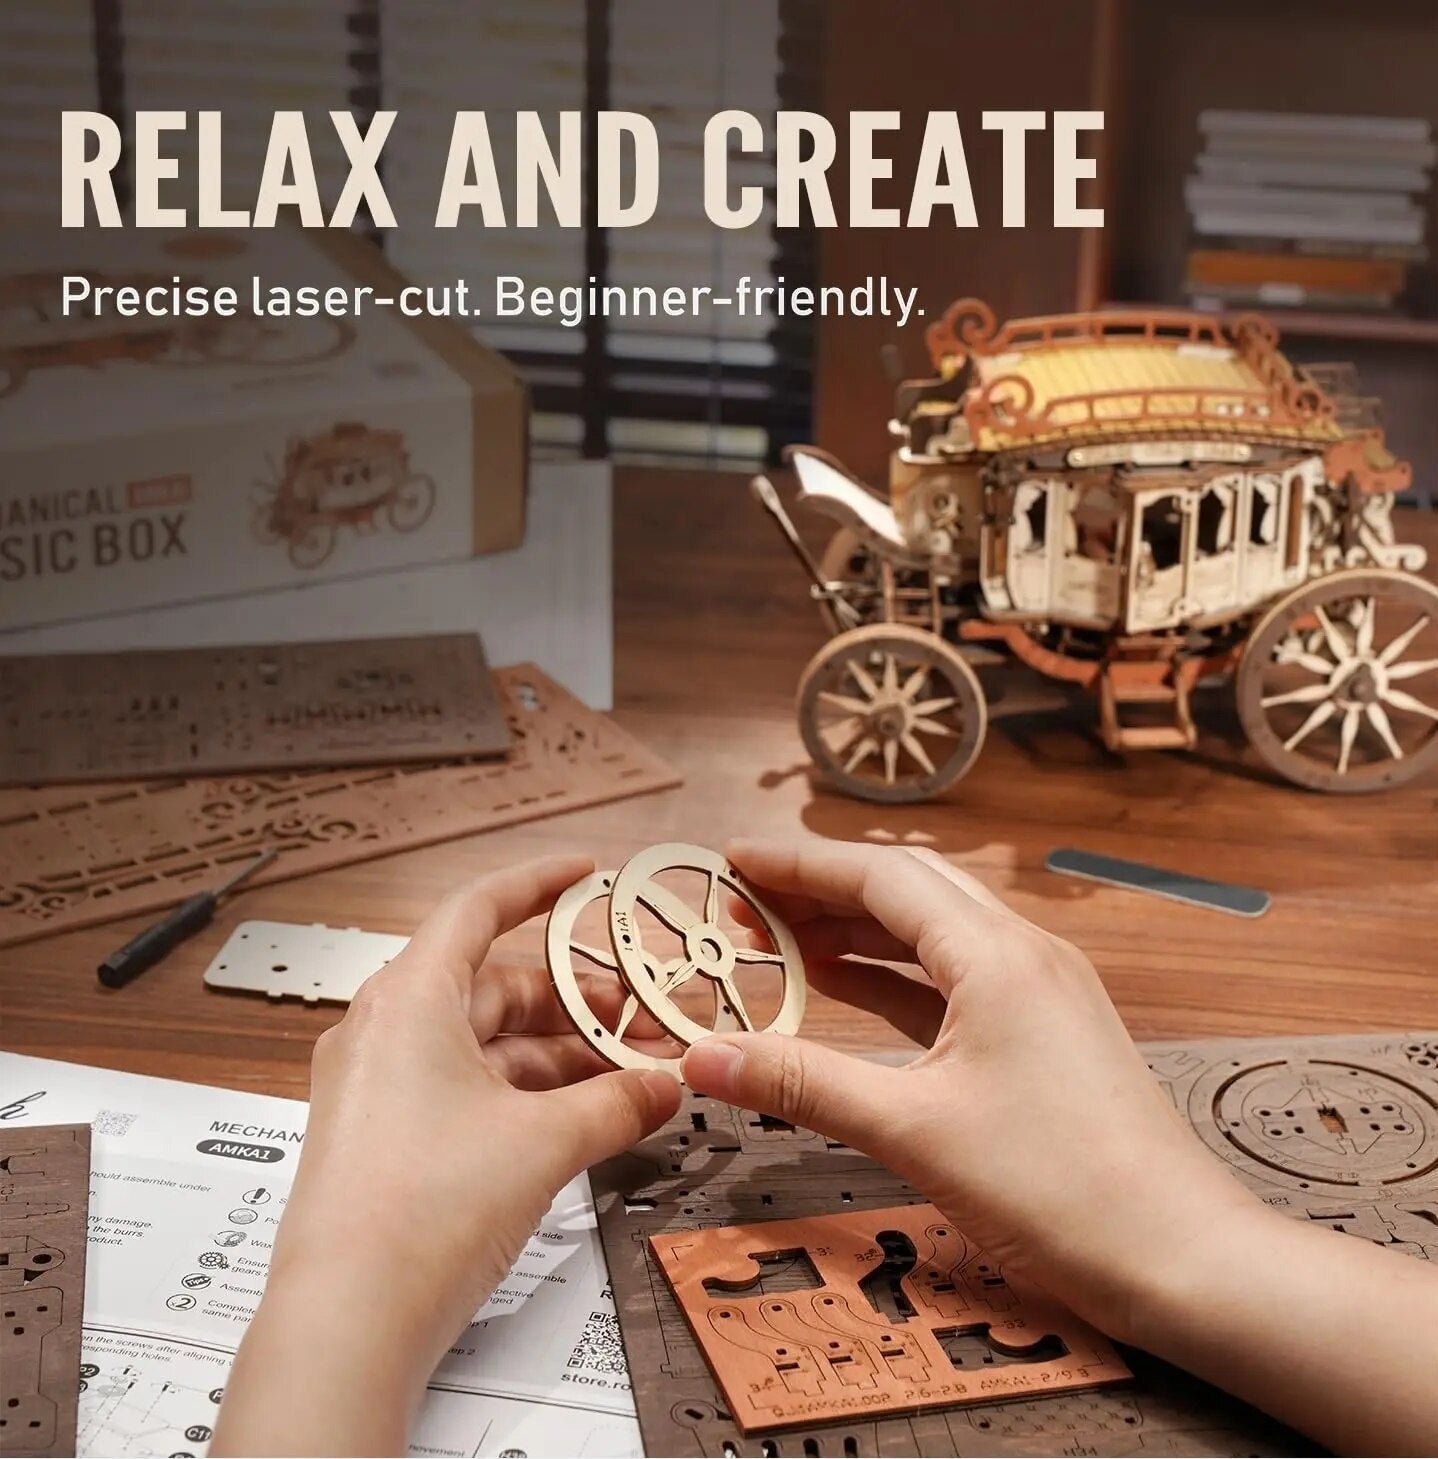 Stagecoach Mechanical Music Box 3D Wooden Puzzle - DIYative™